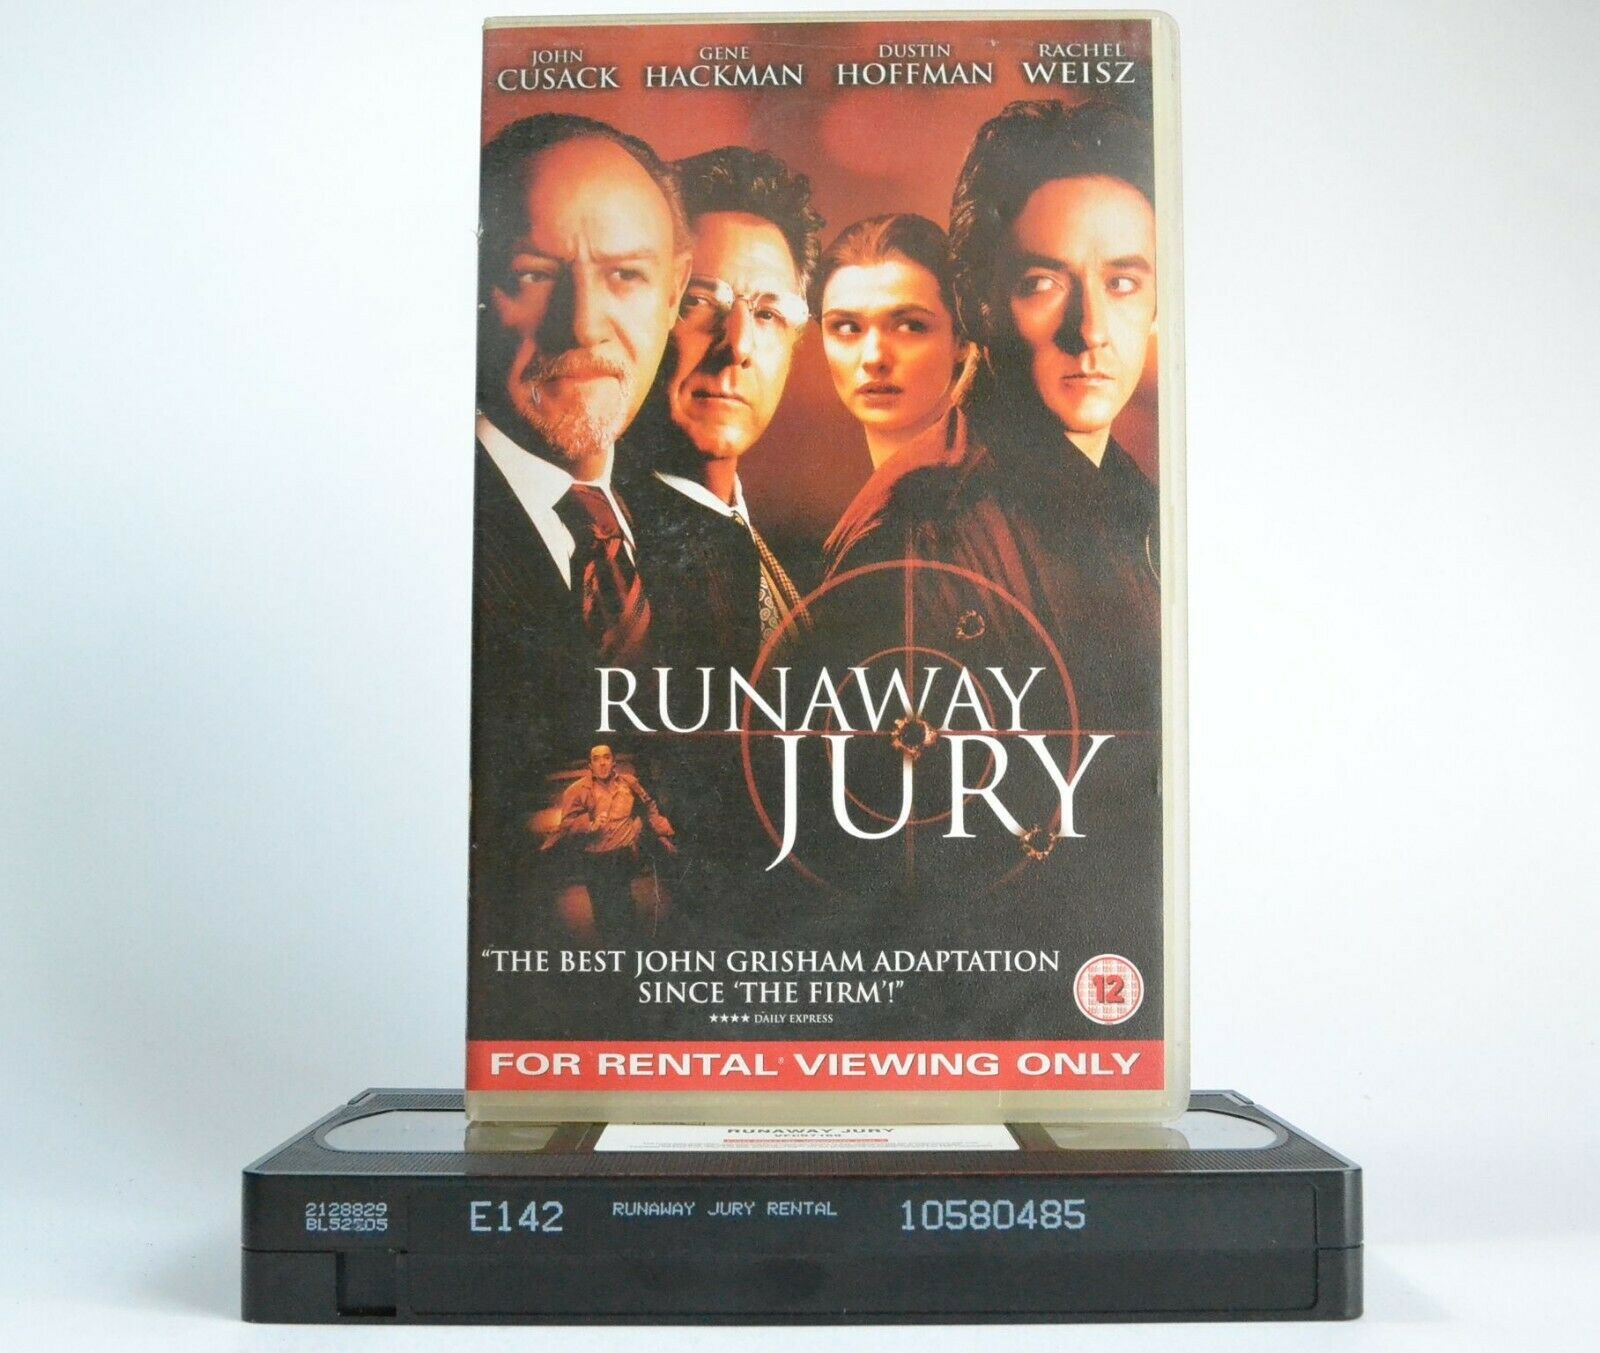 Runaway Jury (2004): Based On J.Grisham Novel - Court Thriller - G.Hackman - VHS-